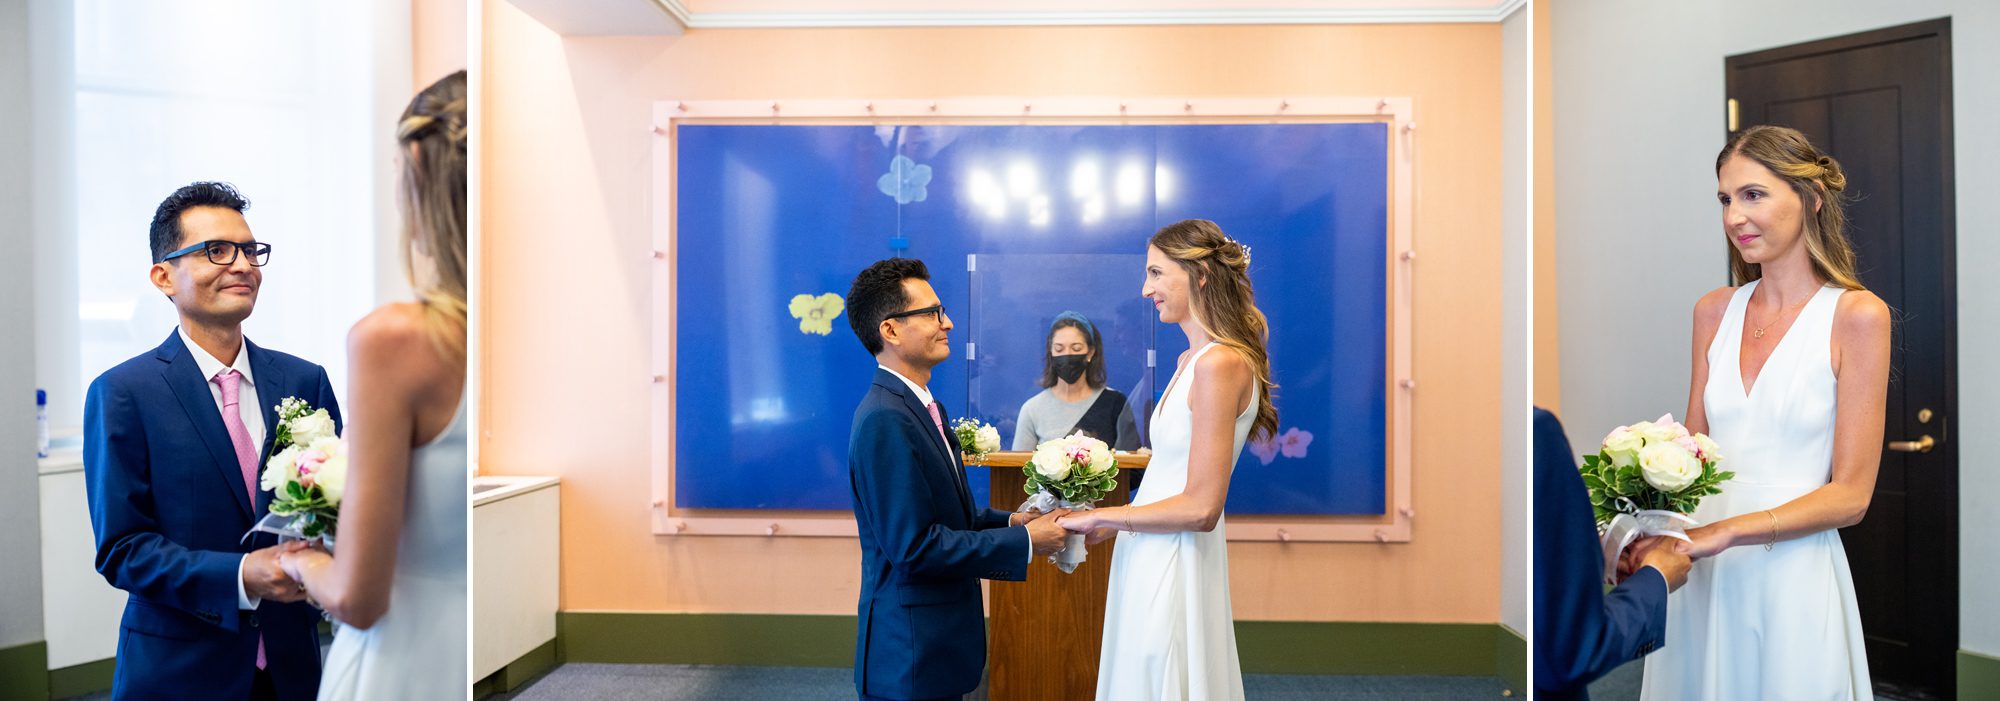 Wedding Ceremony at City Hall NYC